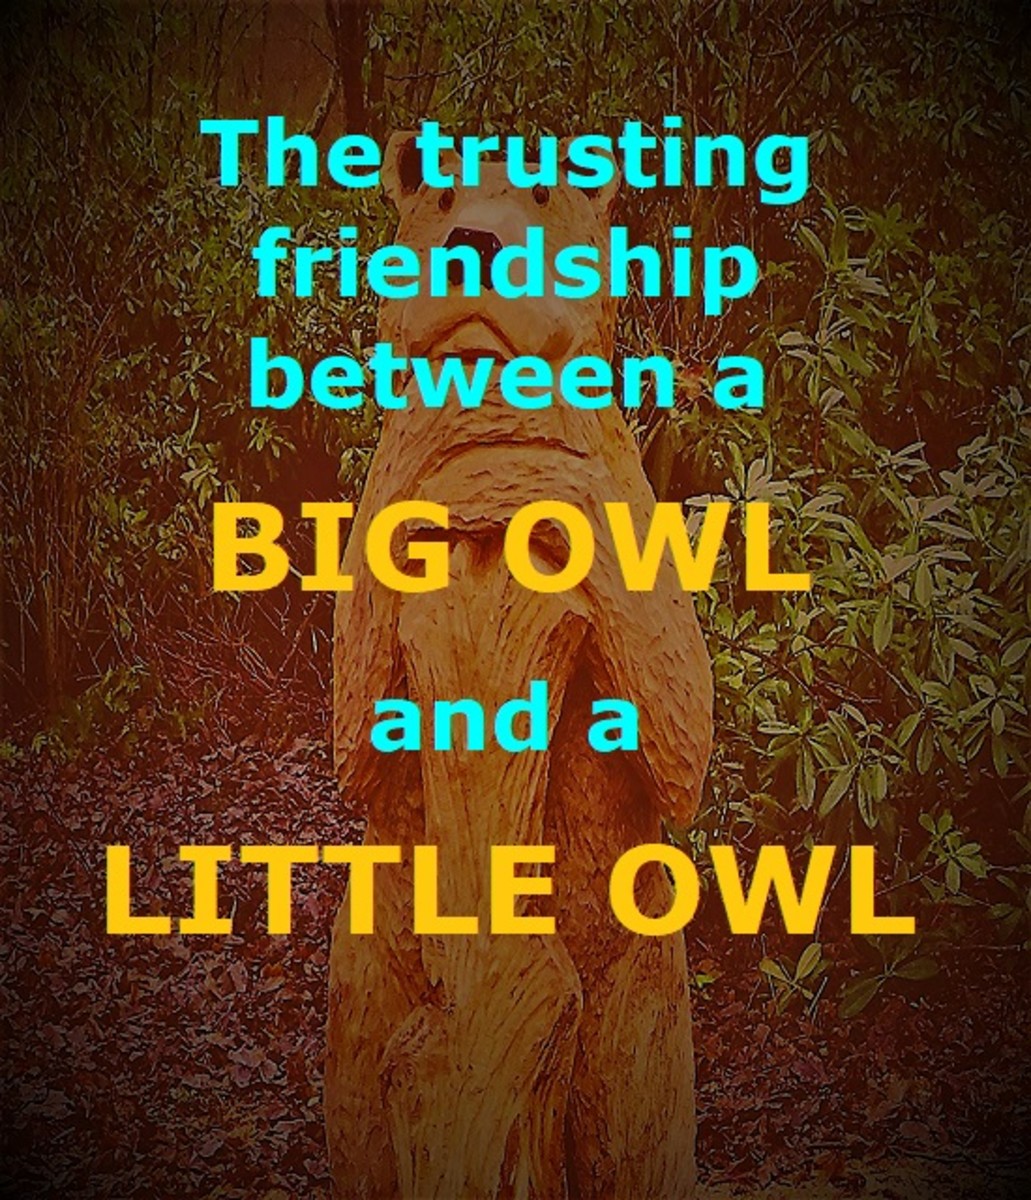 Little Owl - A Friendship Poem